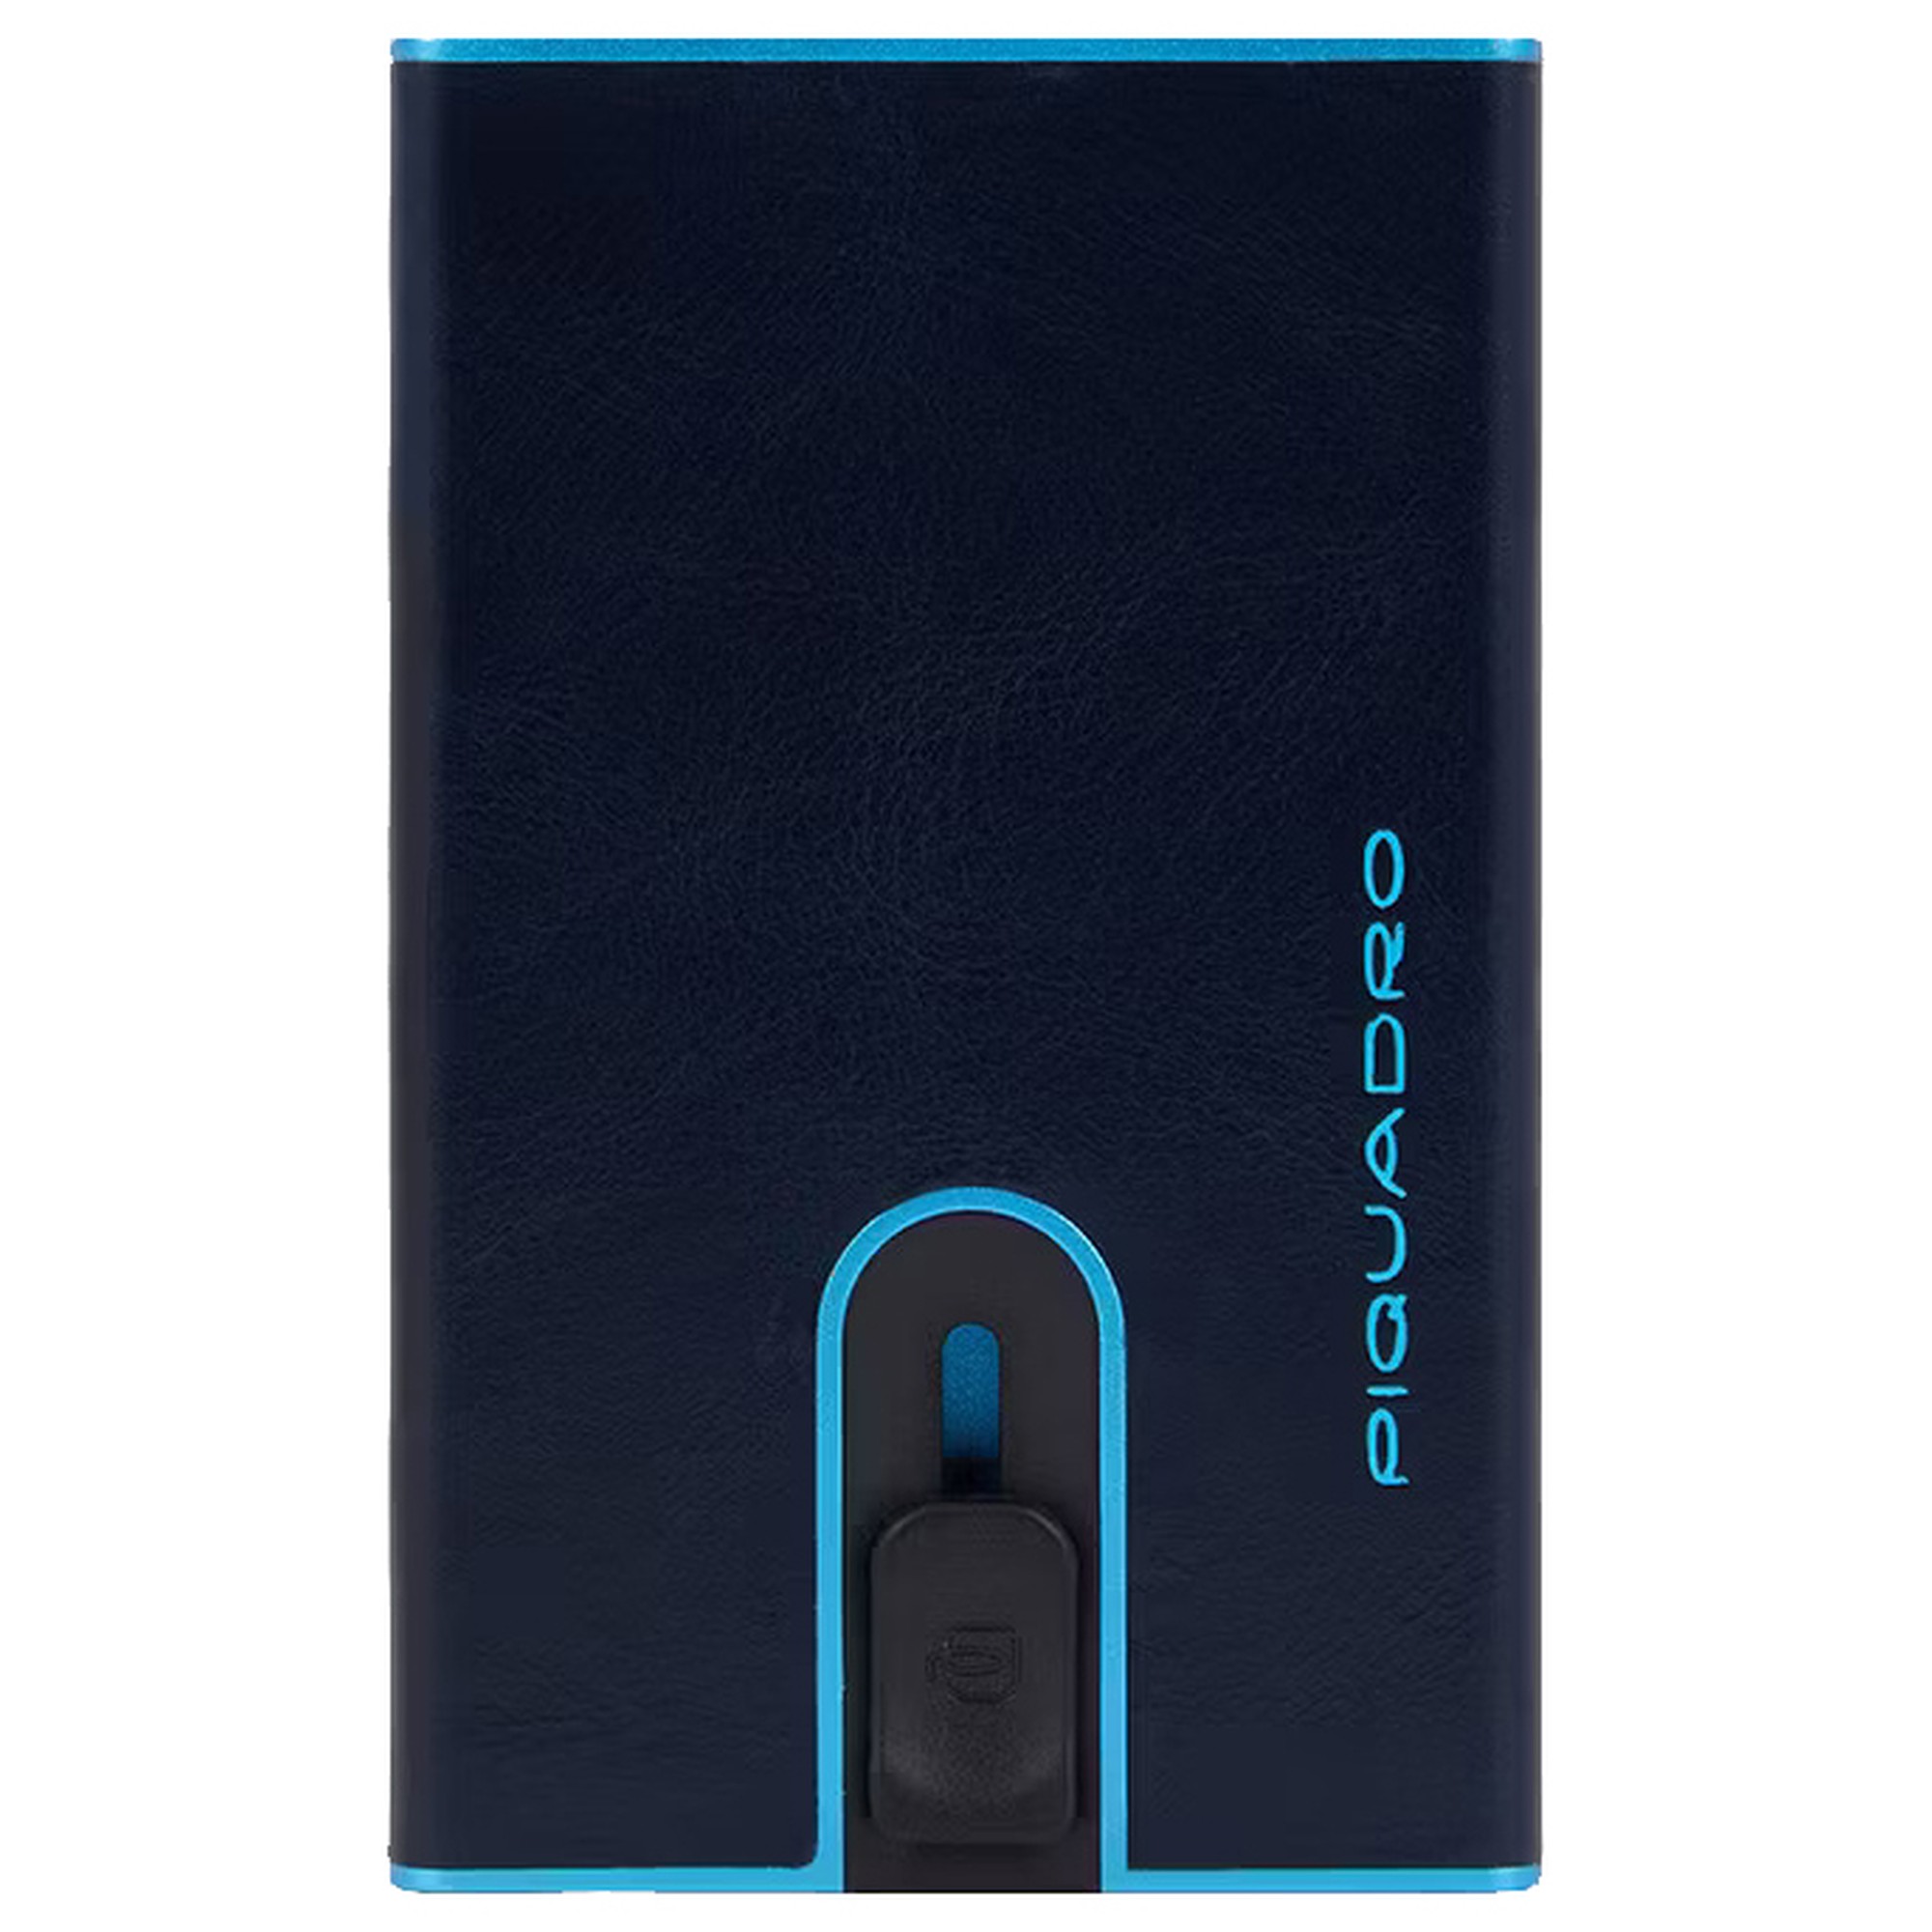 Кошелек Piquadro Blue Square Kreditkartenetui 11cc 10 см RFID, цвет night blue